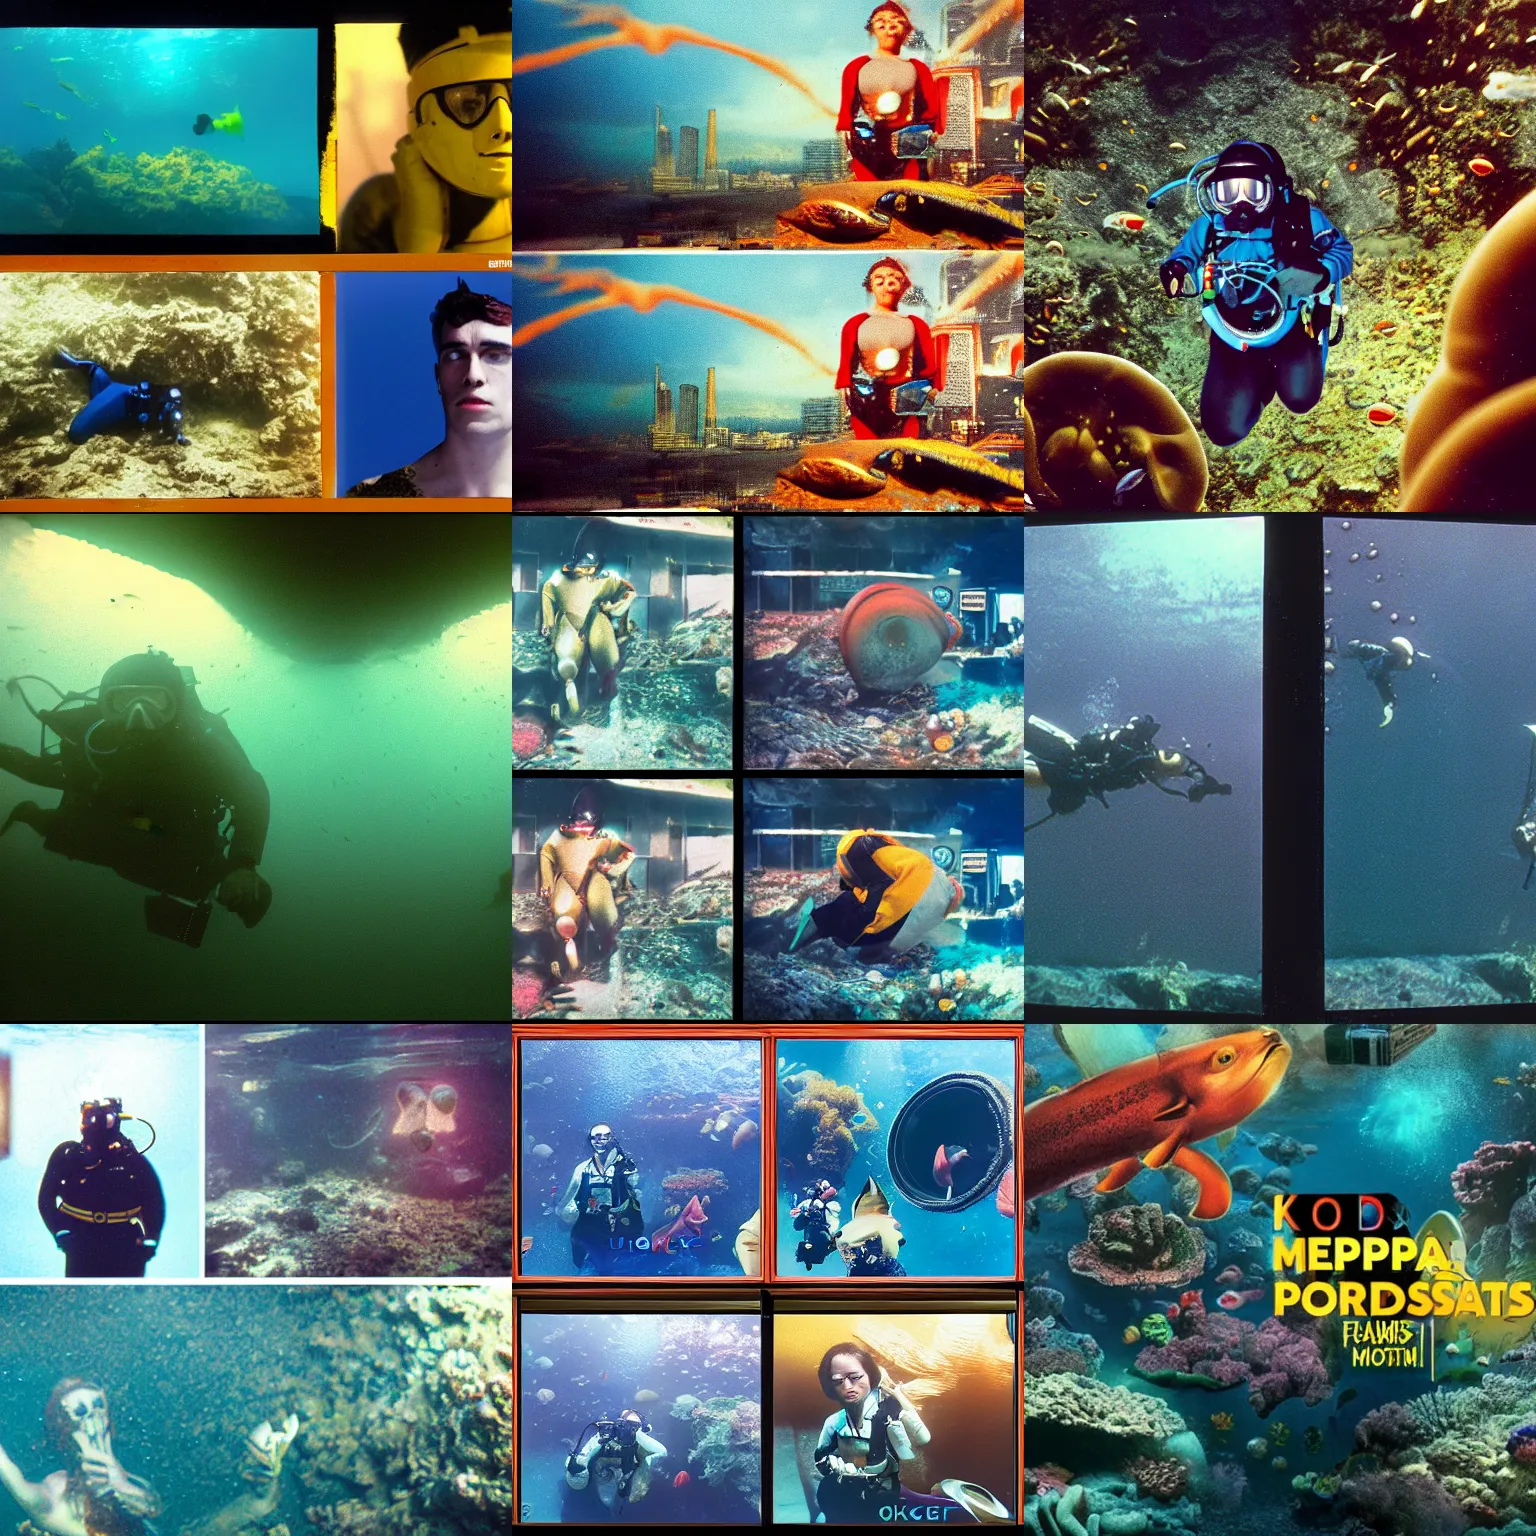 Prompt: Kodak portra 160, 4K, split wipe transition screens: famous deep sea diver in low budget metropolis movie remake, underwater scene